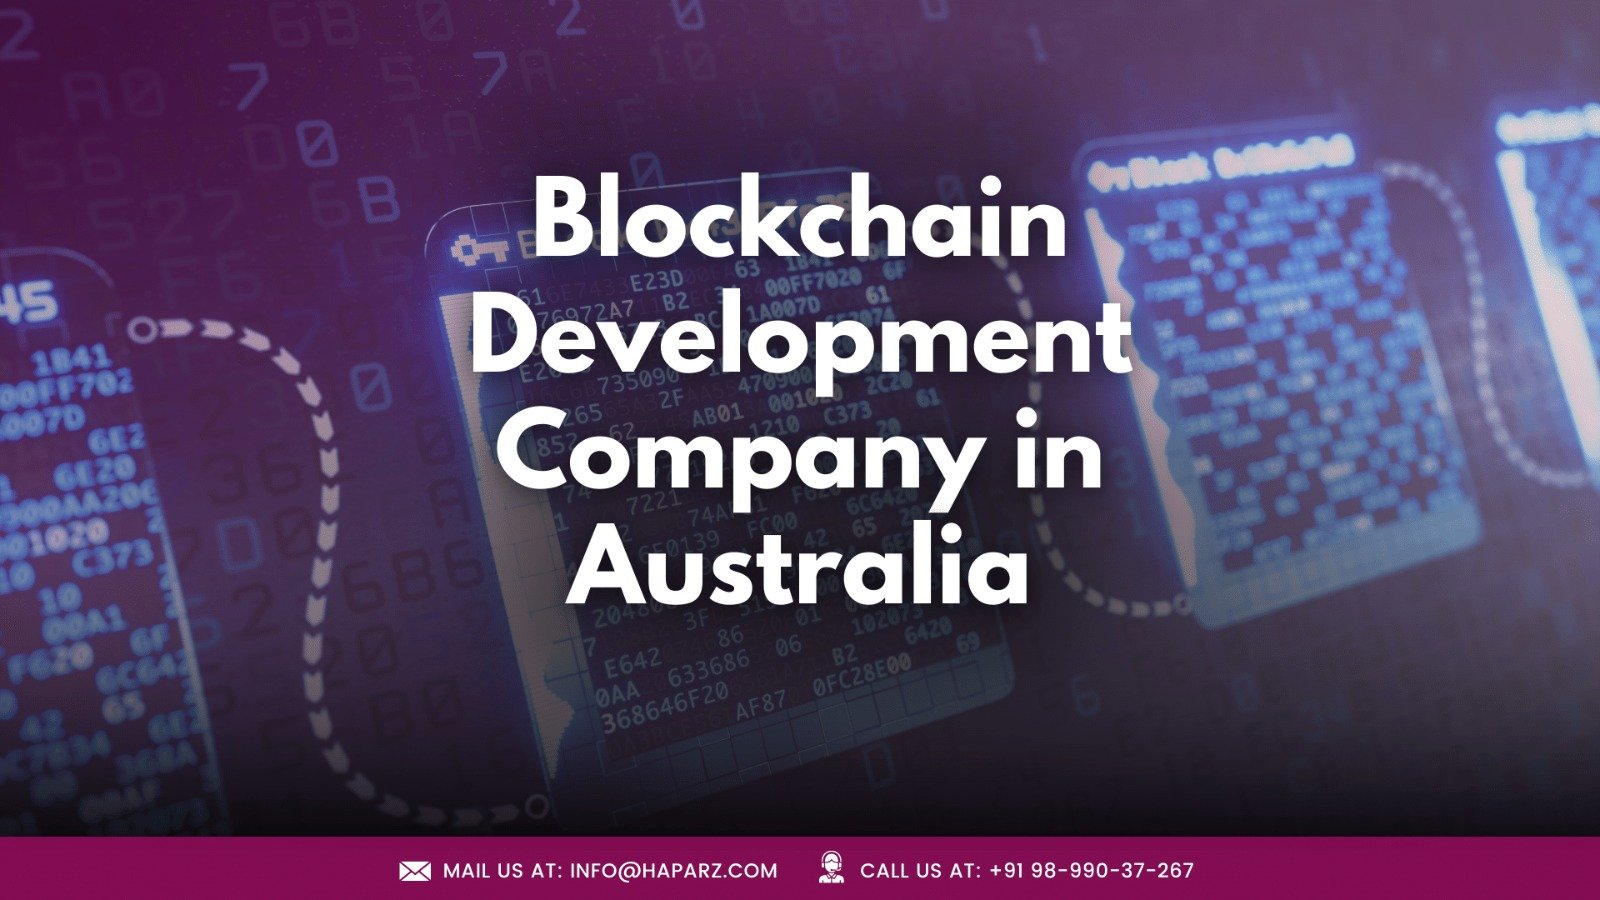 Blockchain Development Company in Australia - Haparz